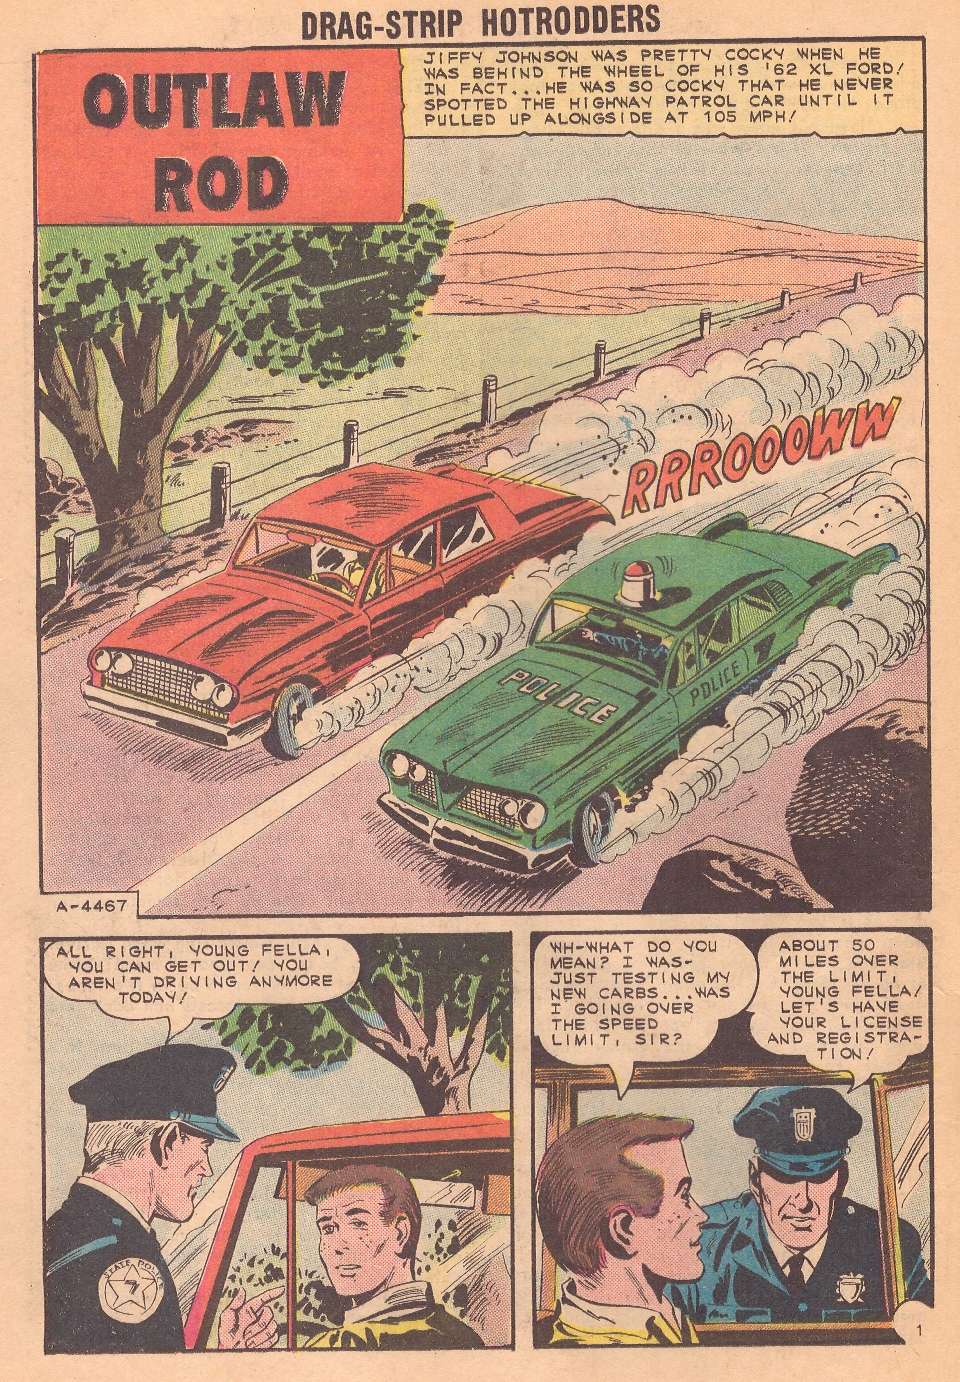 Drag-Strip Hotrodders - 60s Us Comics - January 1965 13191610